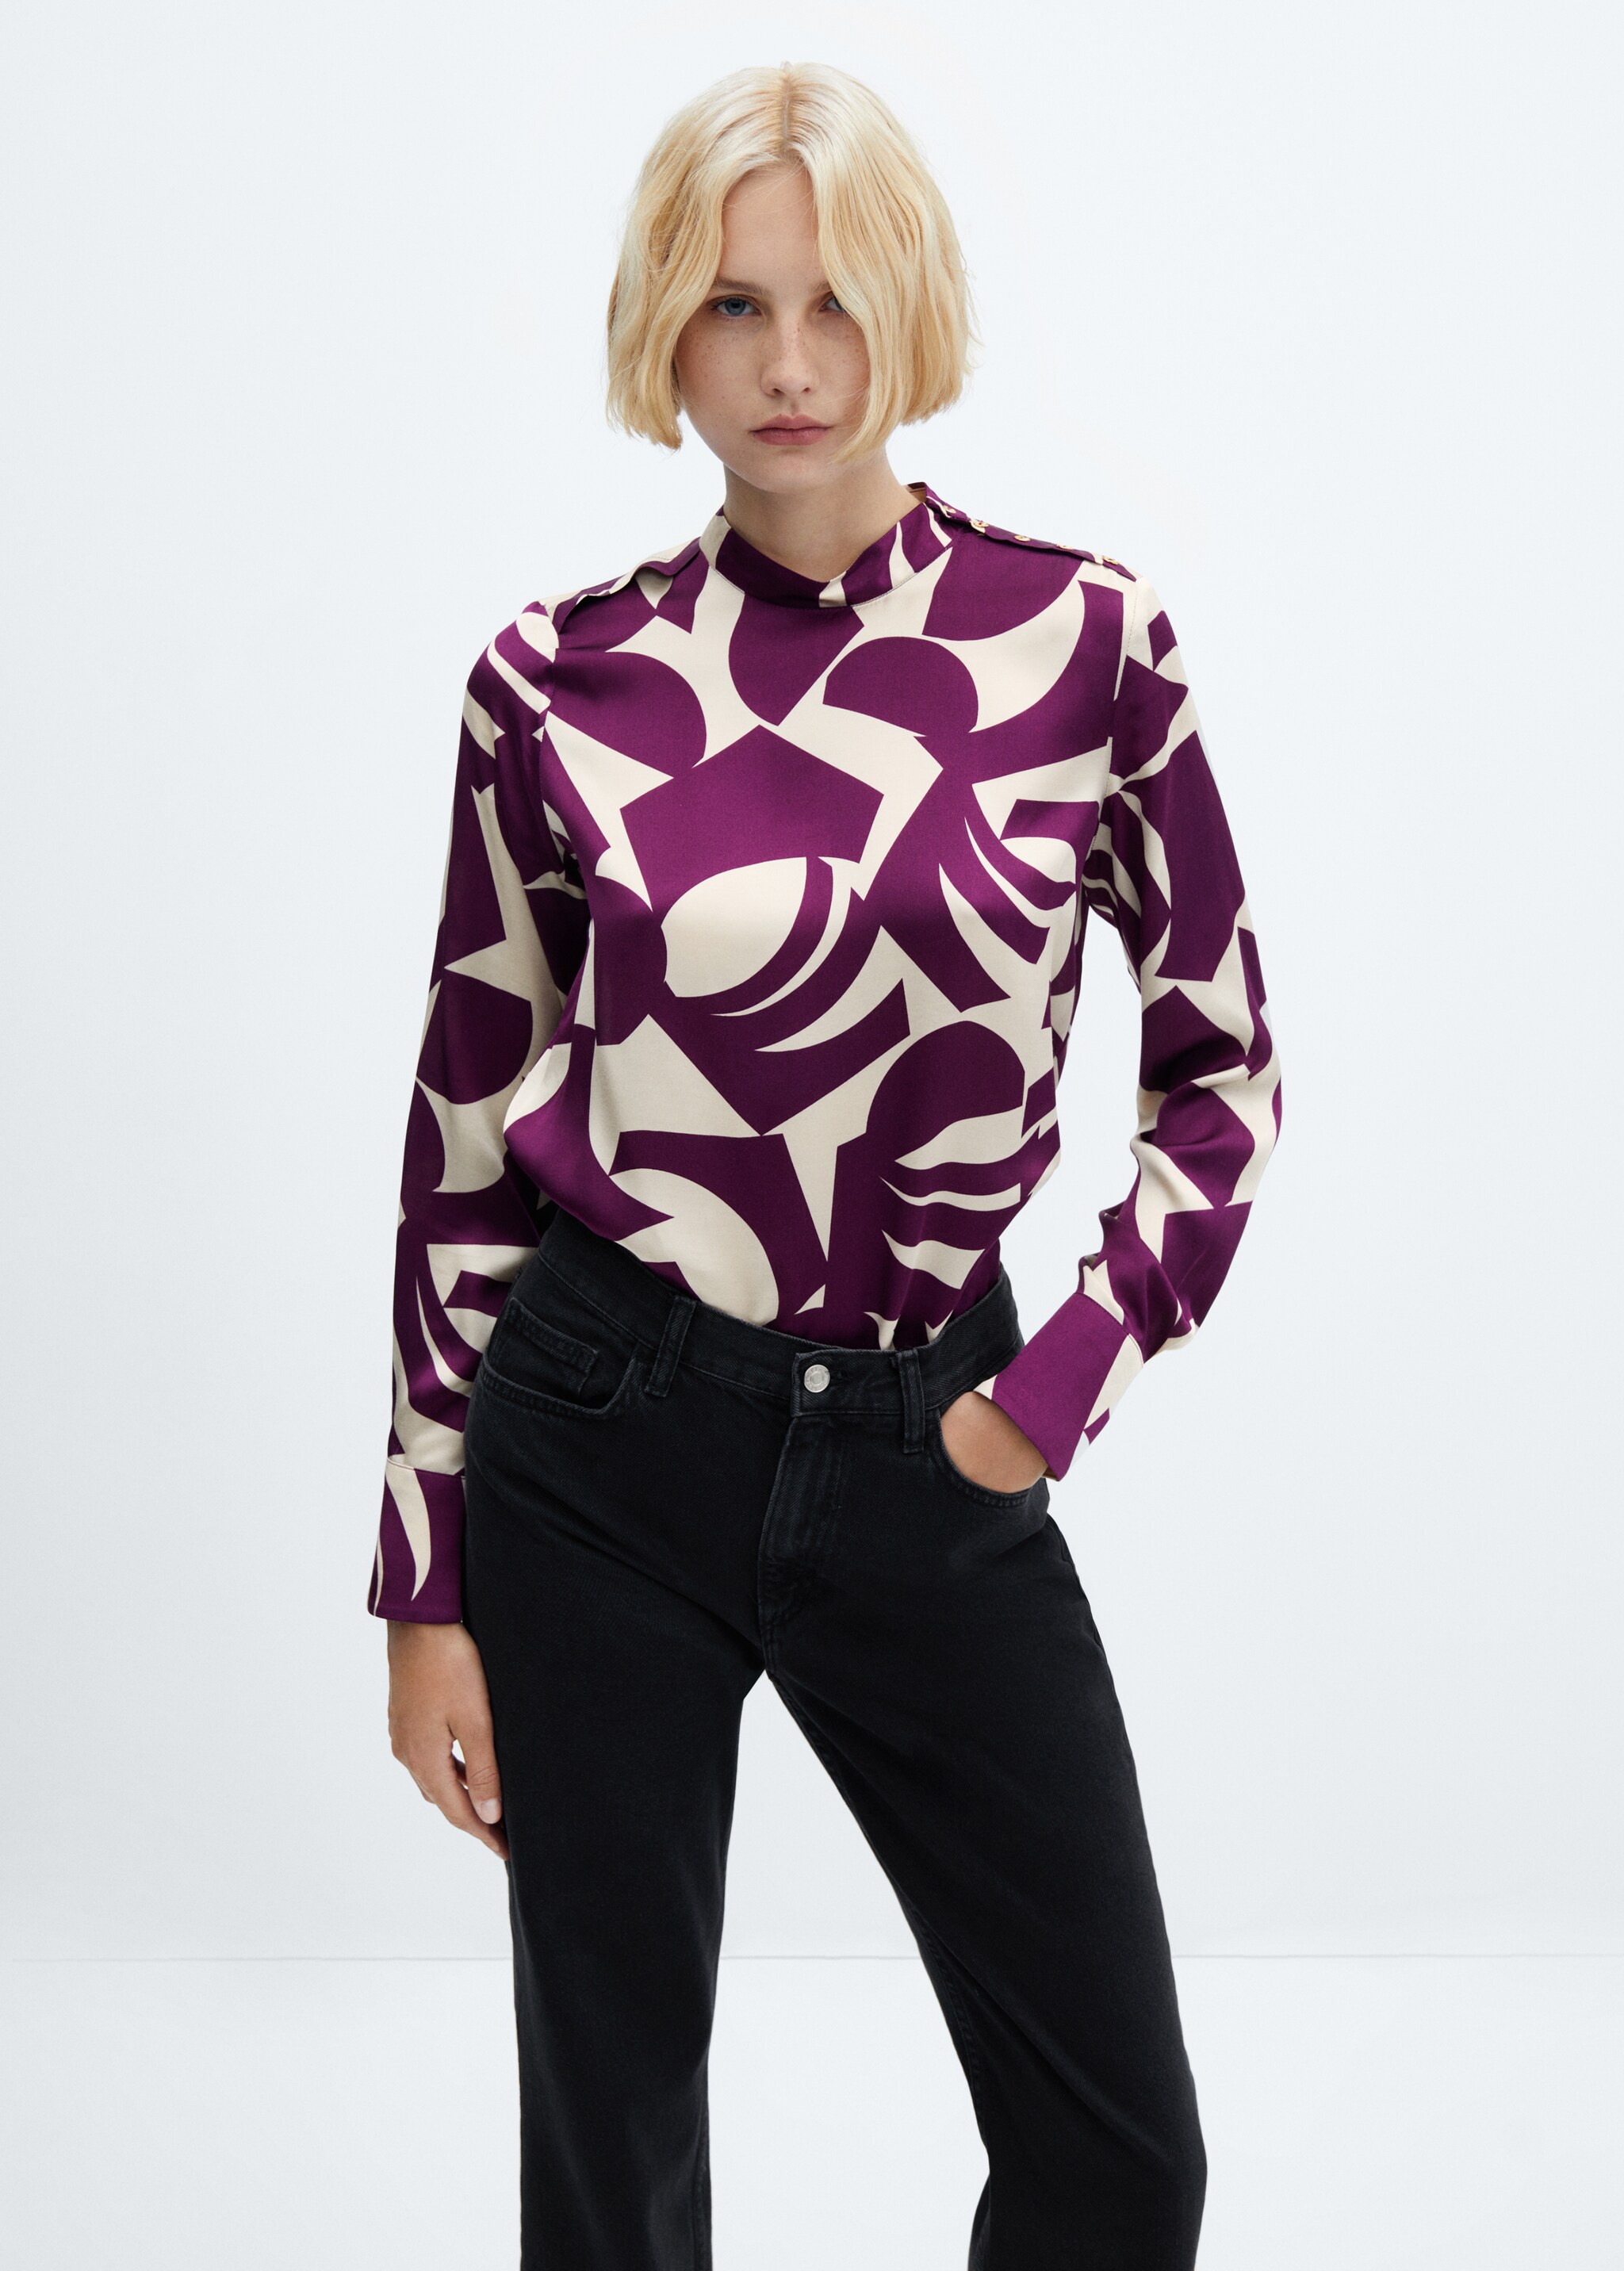 Satin print blouse - Medium plane